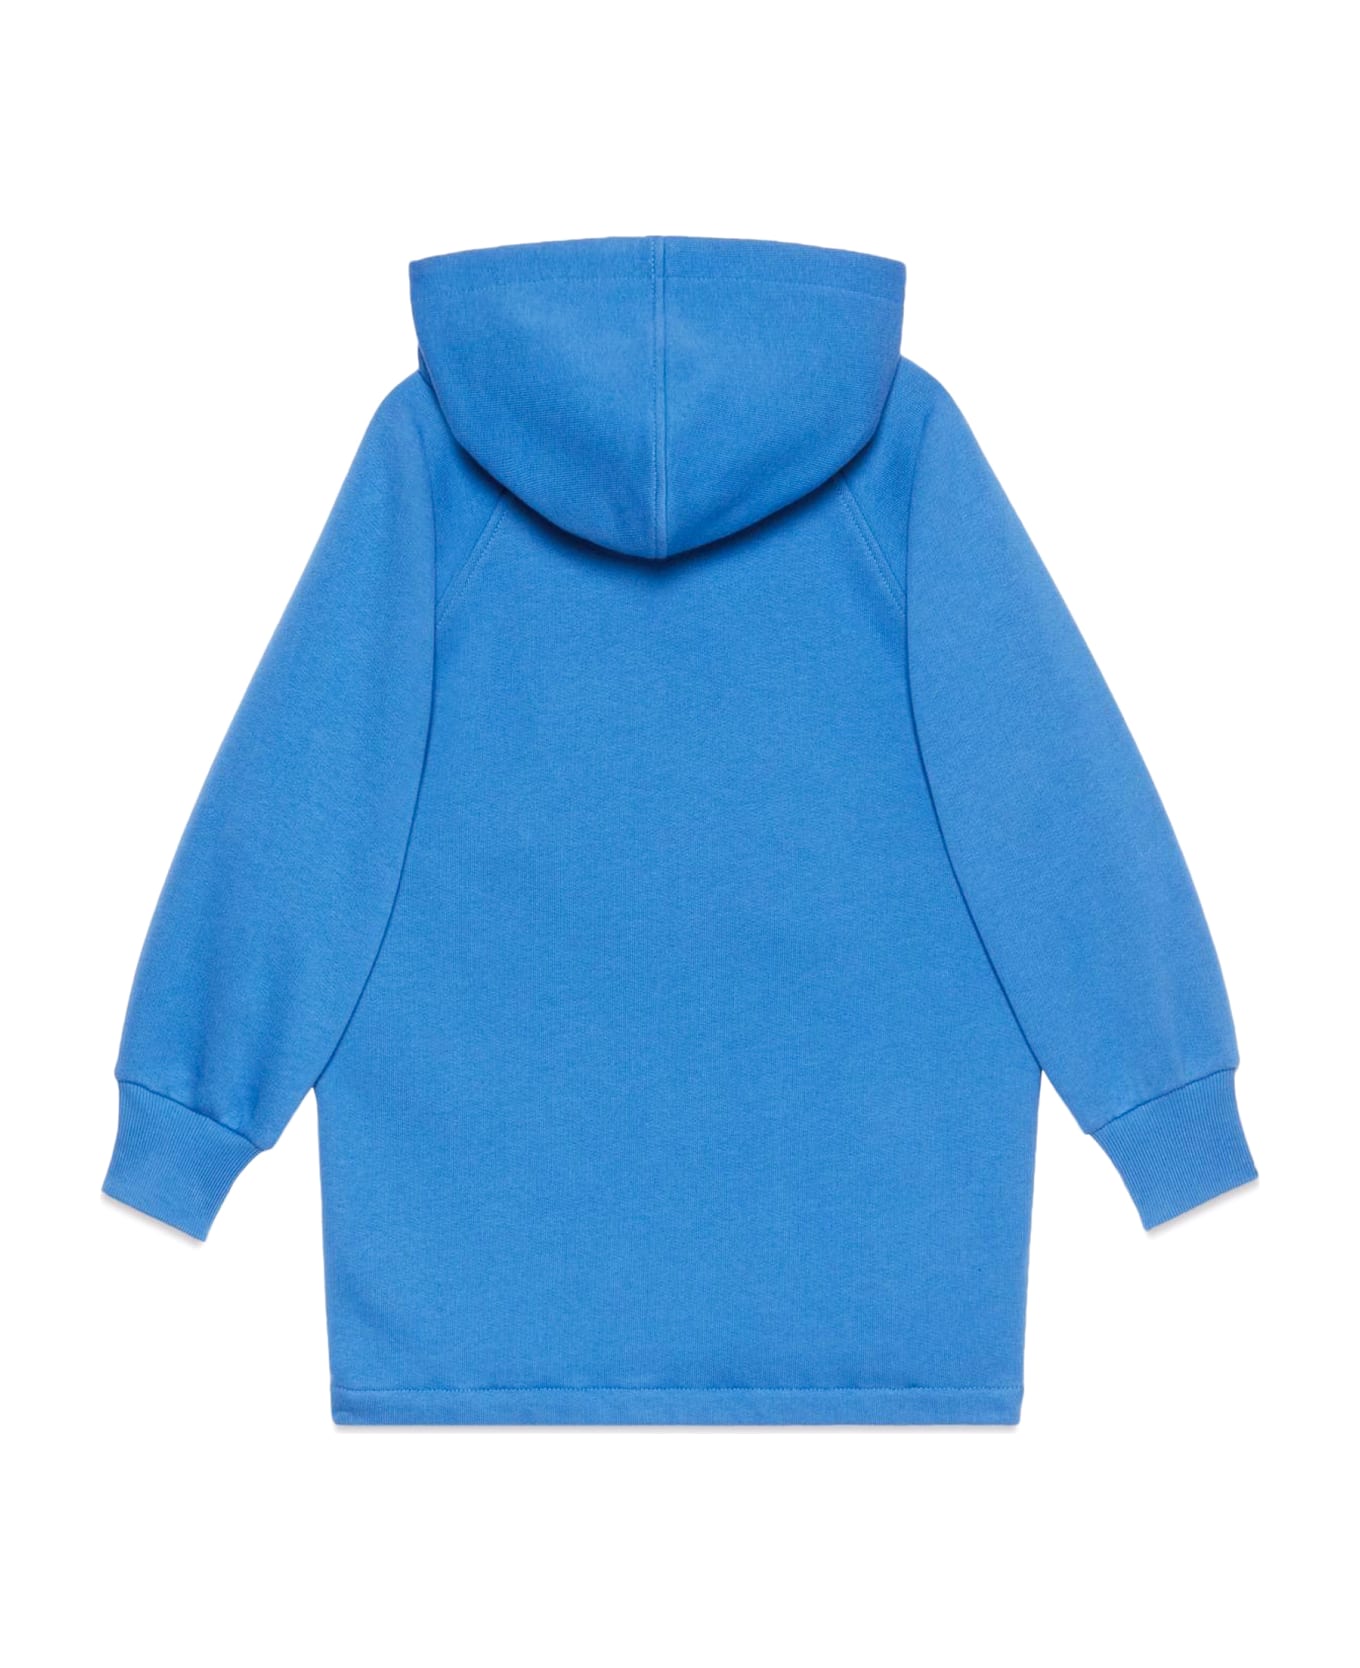 Gucci Children's Cotton Jacket With Gucci Label - LIGHT BLUE